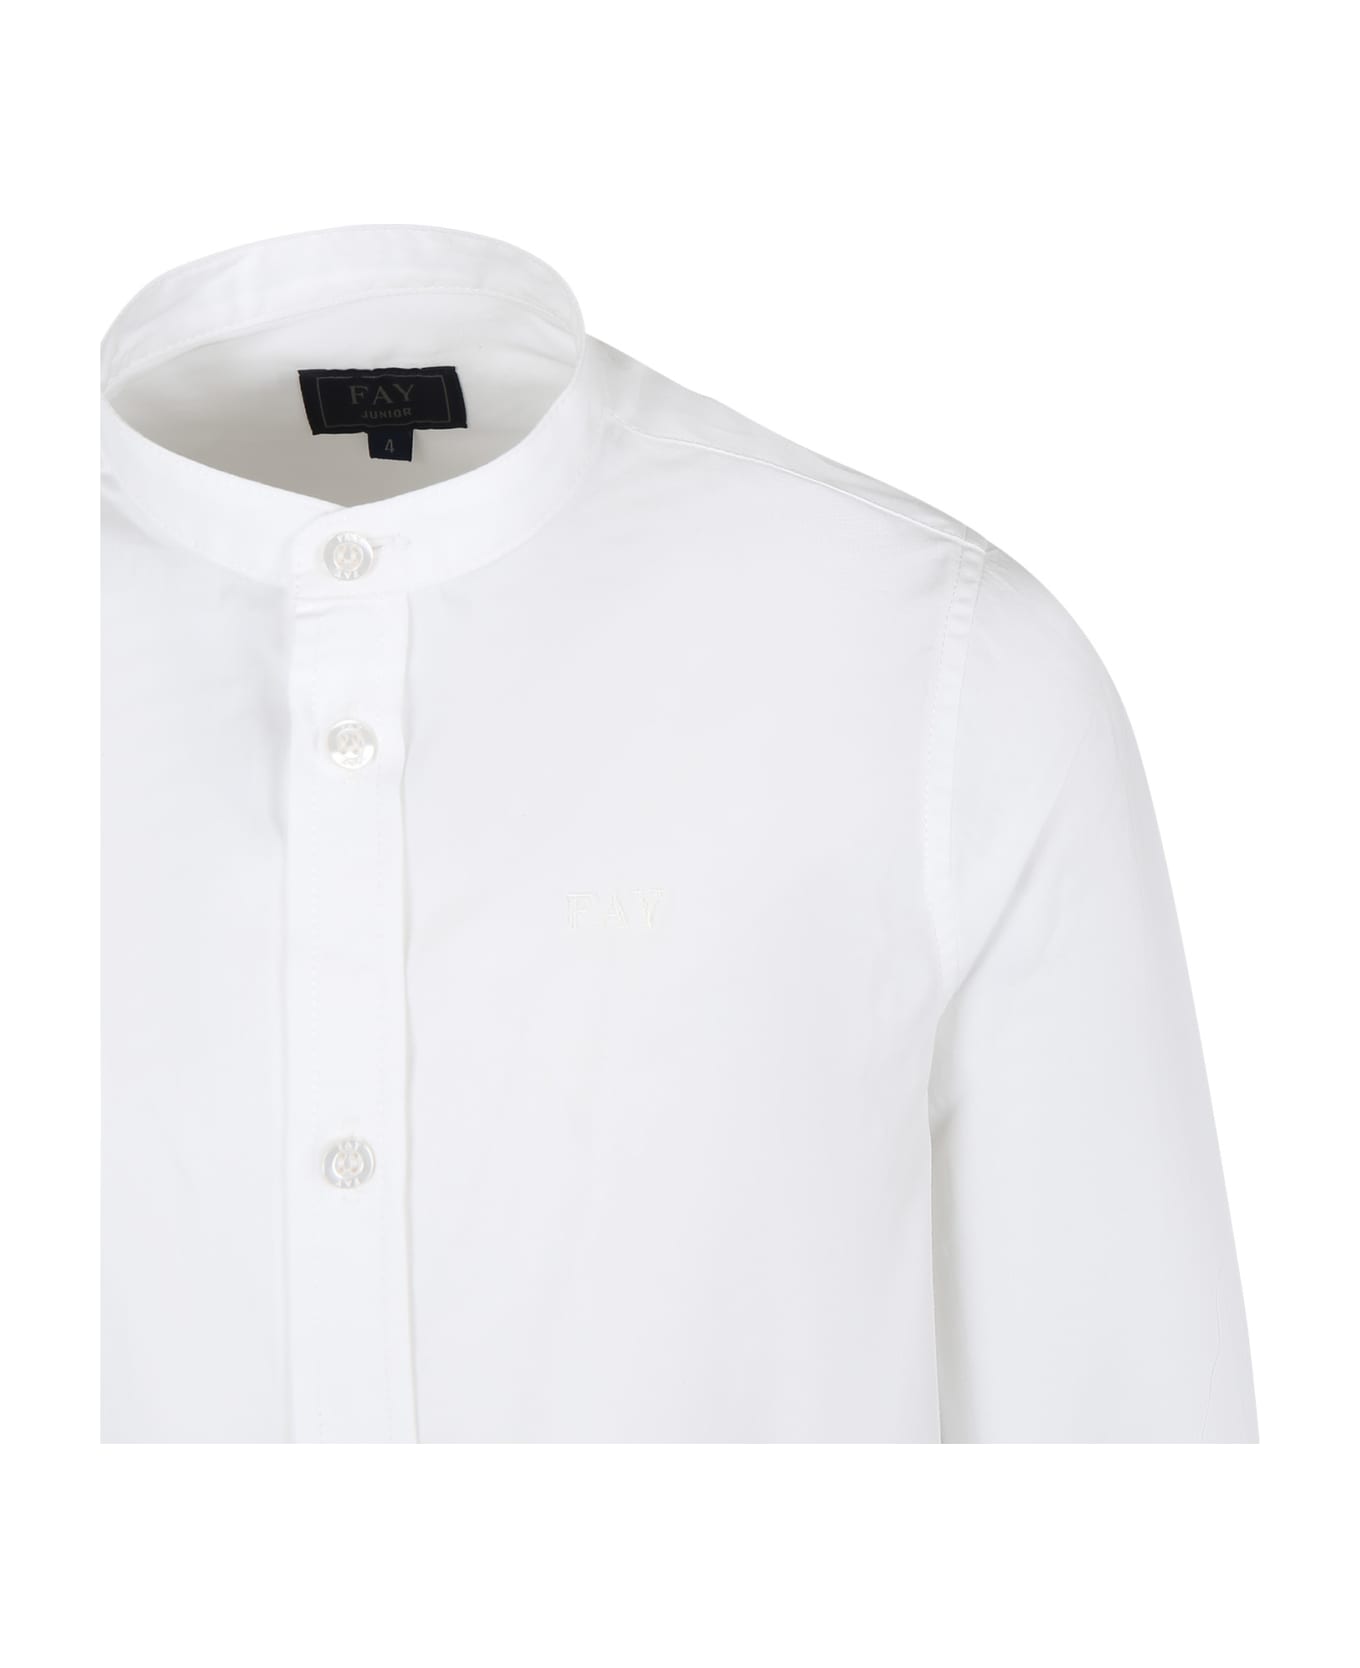 Fay White Shirt For Boy With Logo - White